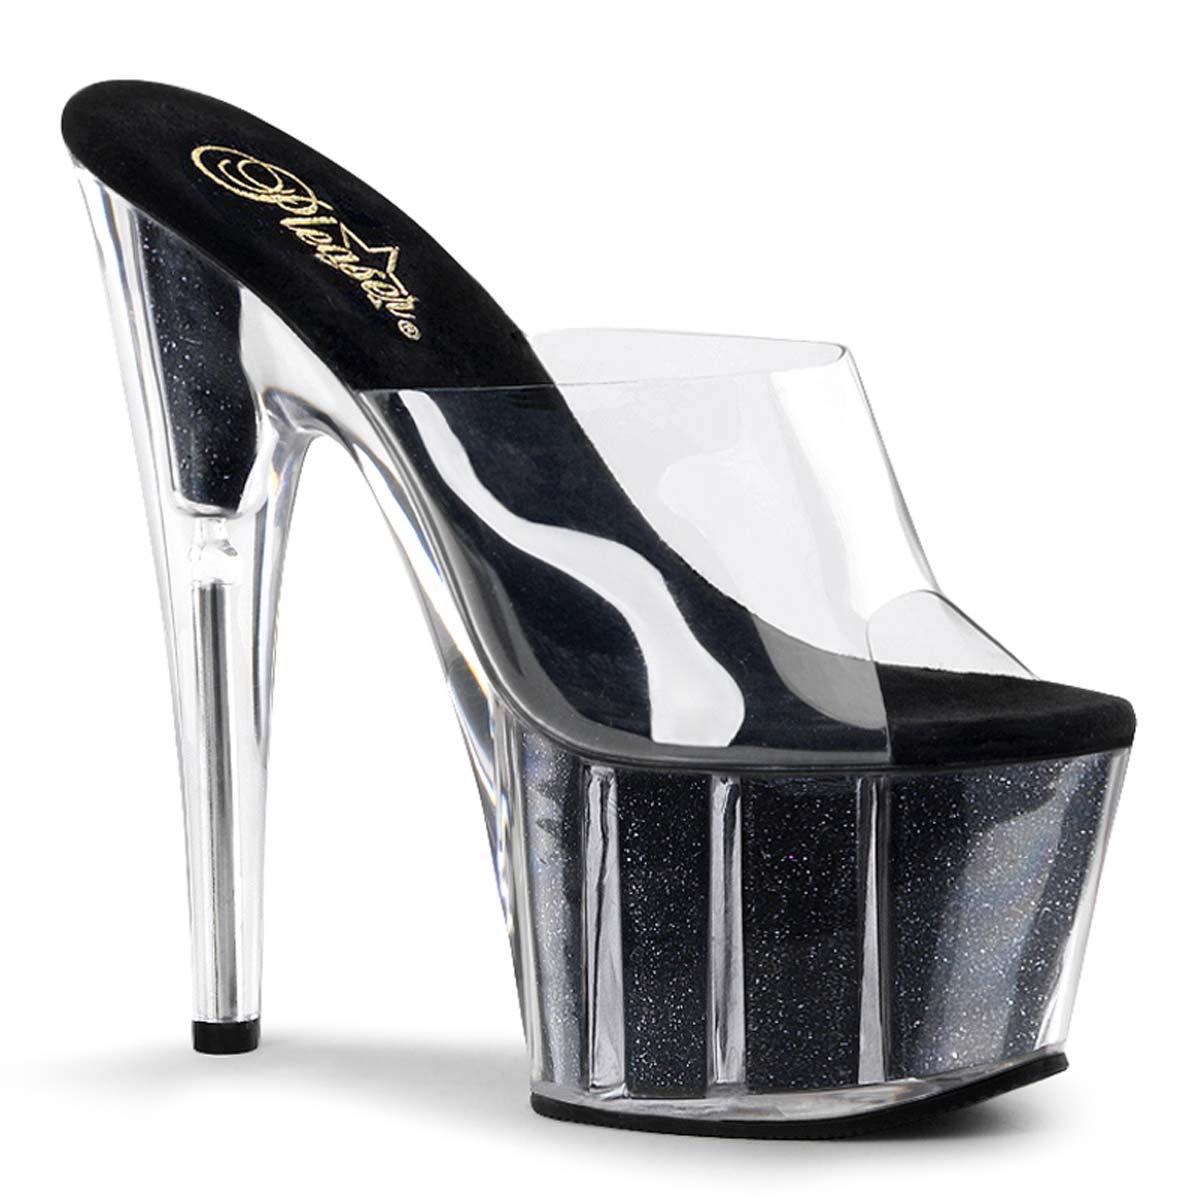 Pleaser Adore-701G - Clear/Black Glitter in Sexy Heels & Platforms - $55.95